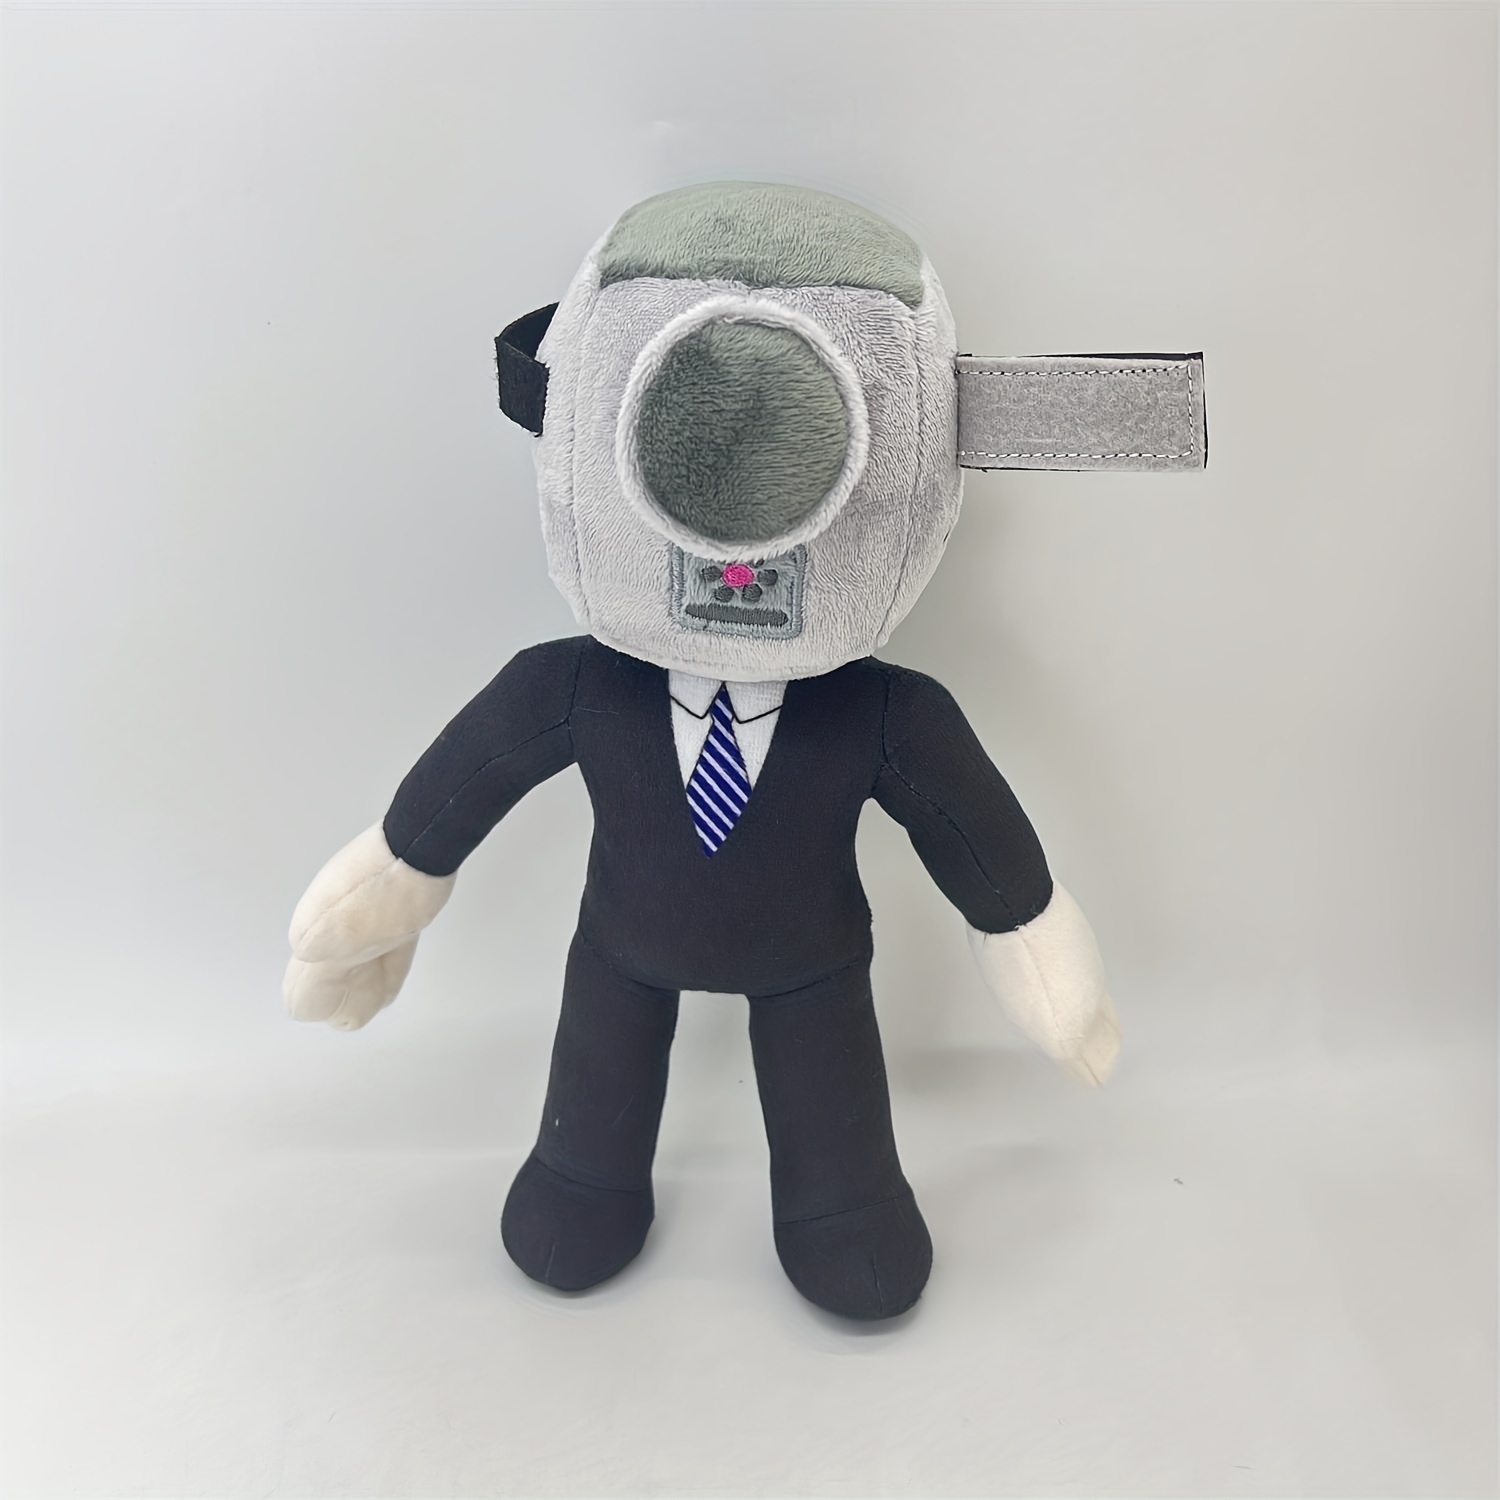 Skibidi Toilet Man Plush, Cameraman Plush Titan TV Man 9.84-inch Toys Funny  Smile Face Soft Stuffed Anime for Fans Kids Friends and Collectors